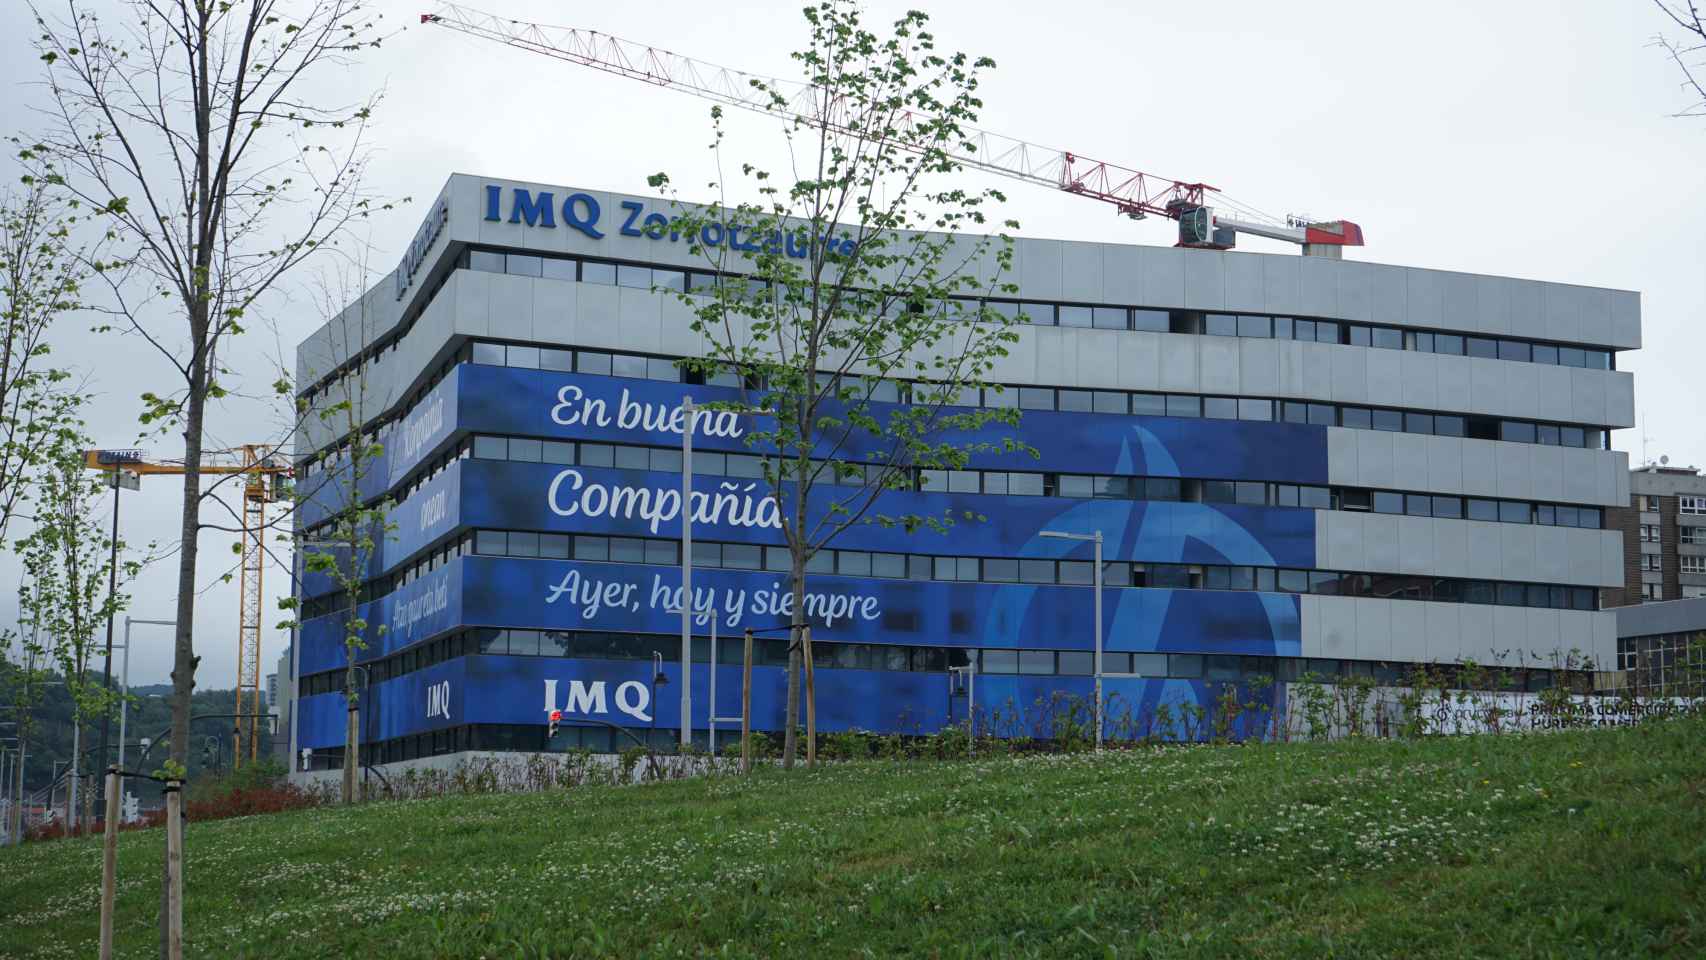 IMQ Zorrotzaurre es la mayor clínica sanitaria privada de Euskadi.